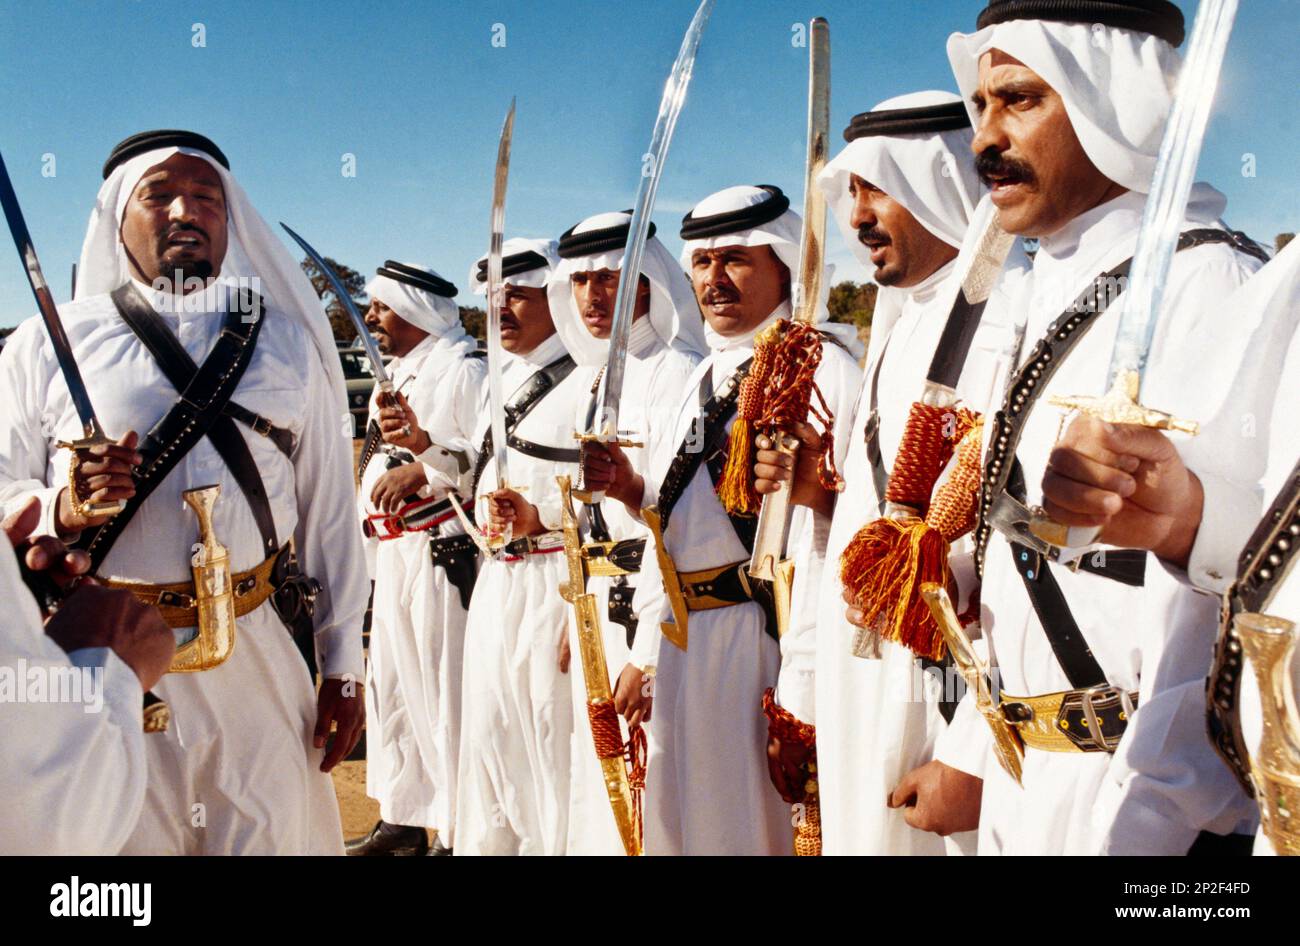 Saudi Arabia National Guards Performing the Saudi Ardah Folkloric Dance Using Swords A UNESCO Intangible Cultural Heritage Stock Photo